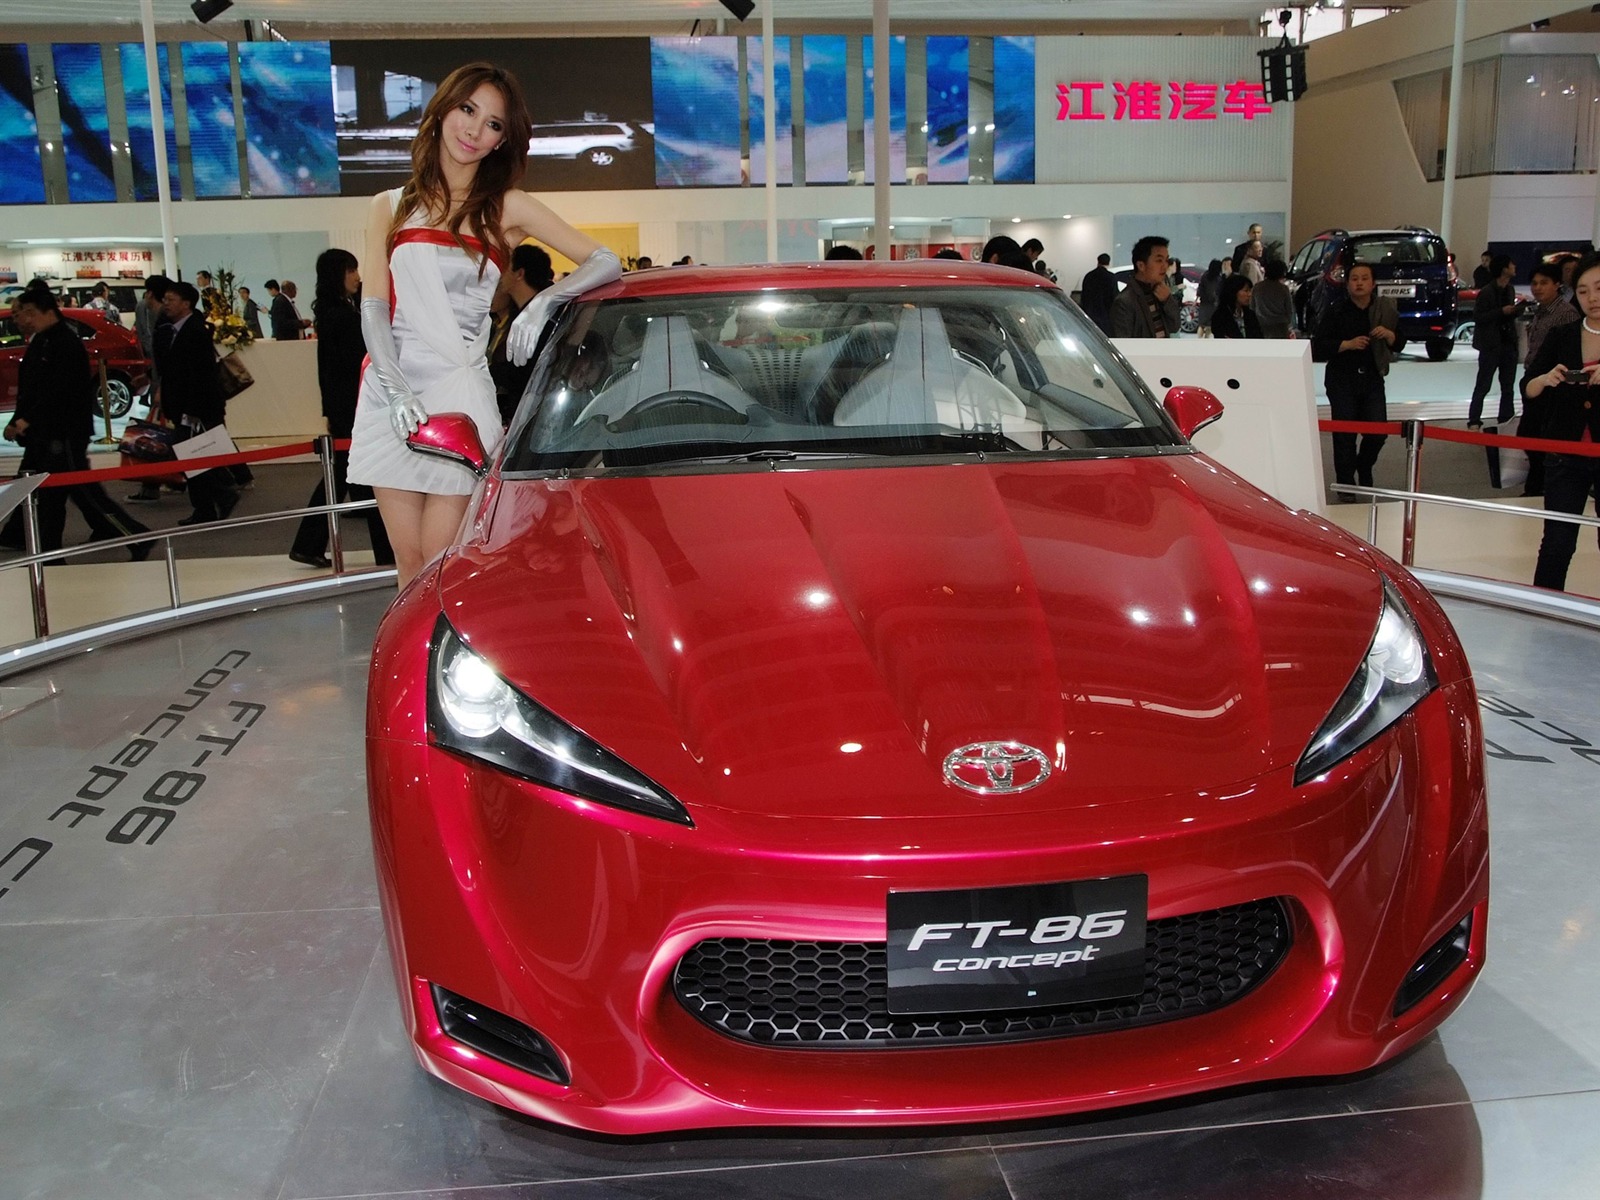 2010 Salón Internacional del Automóvil de Beijing Heung Che belleza (obras barras de refuerzo) #23 - 1600x1200